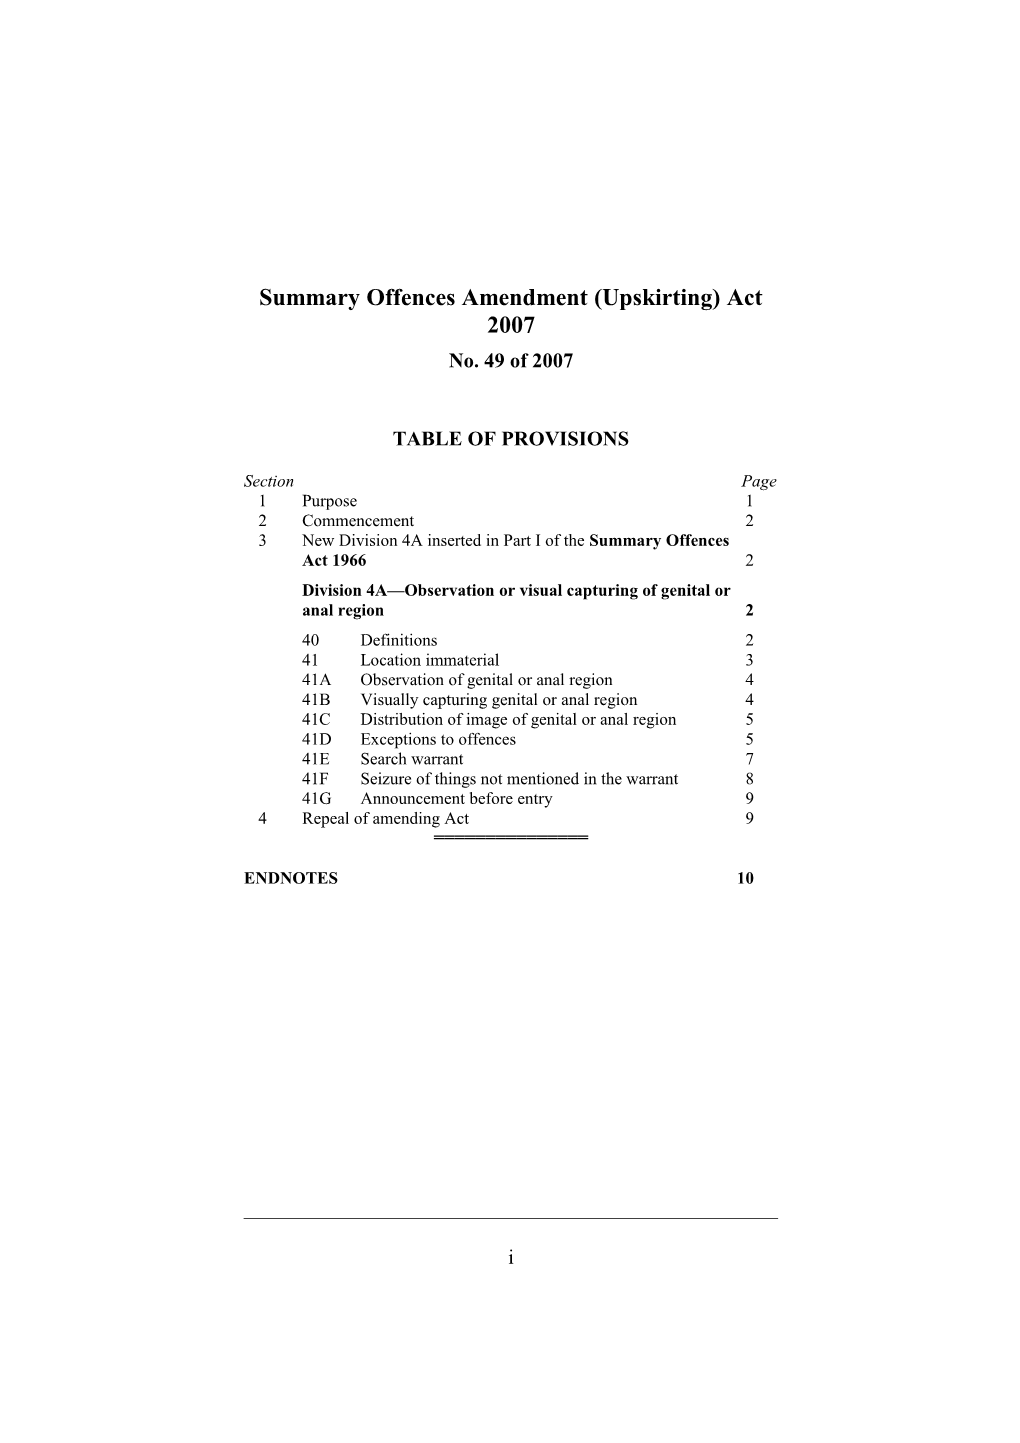 Summary Offences Amendment (Upskirting) Act 2007